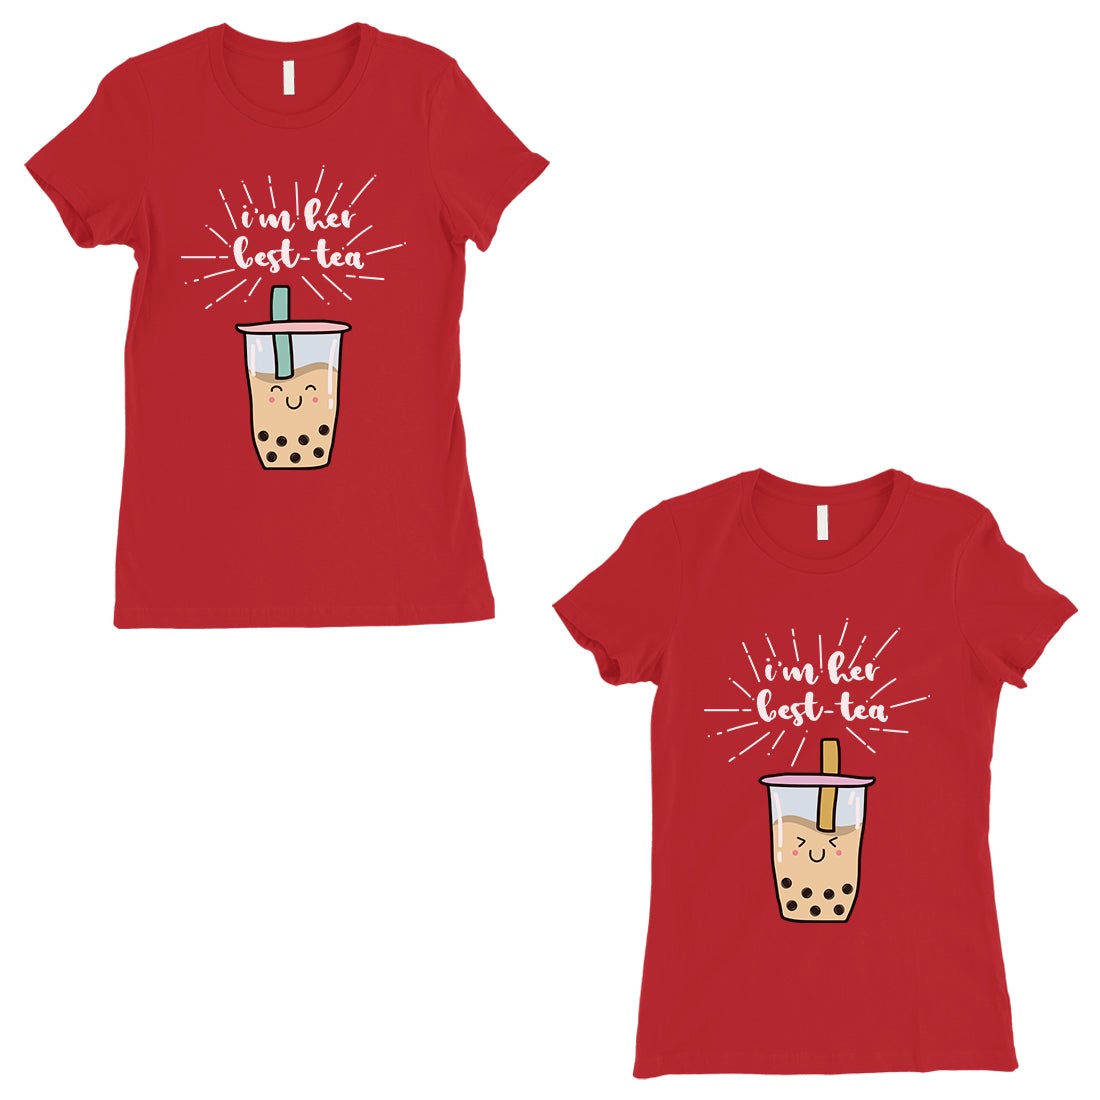 Boba Milk Best-Tea BFF Gift Matching Shirts Womens Red T-Shirt